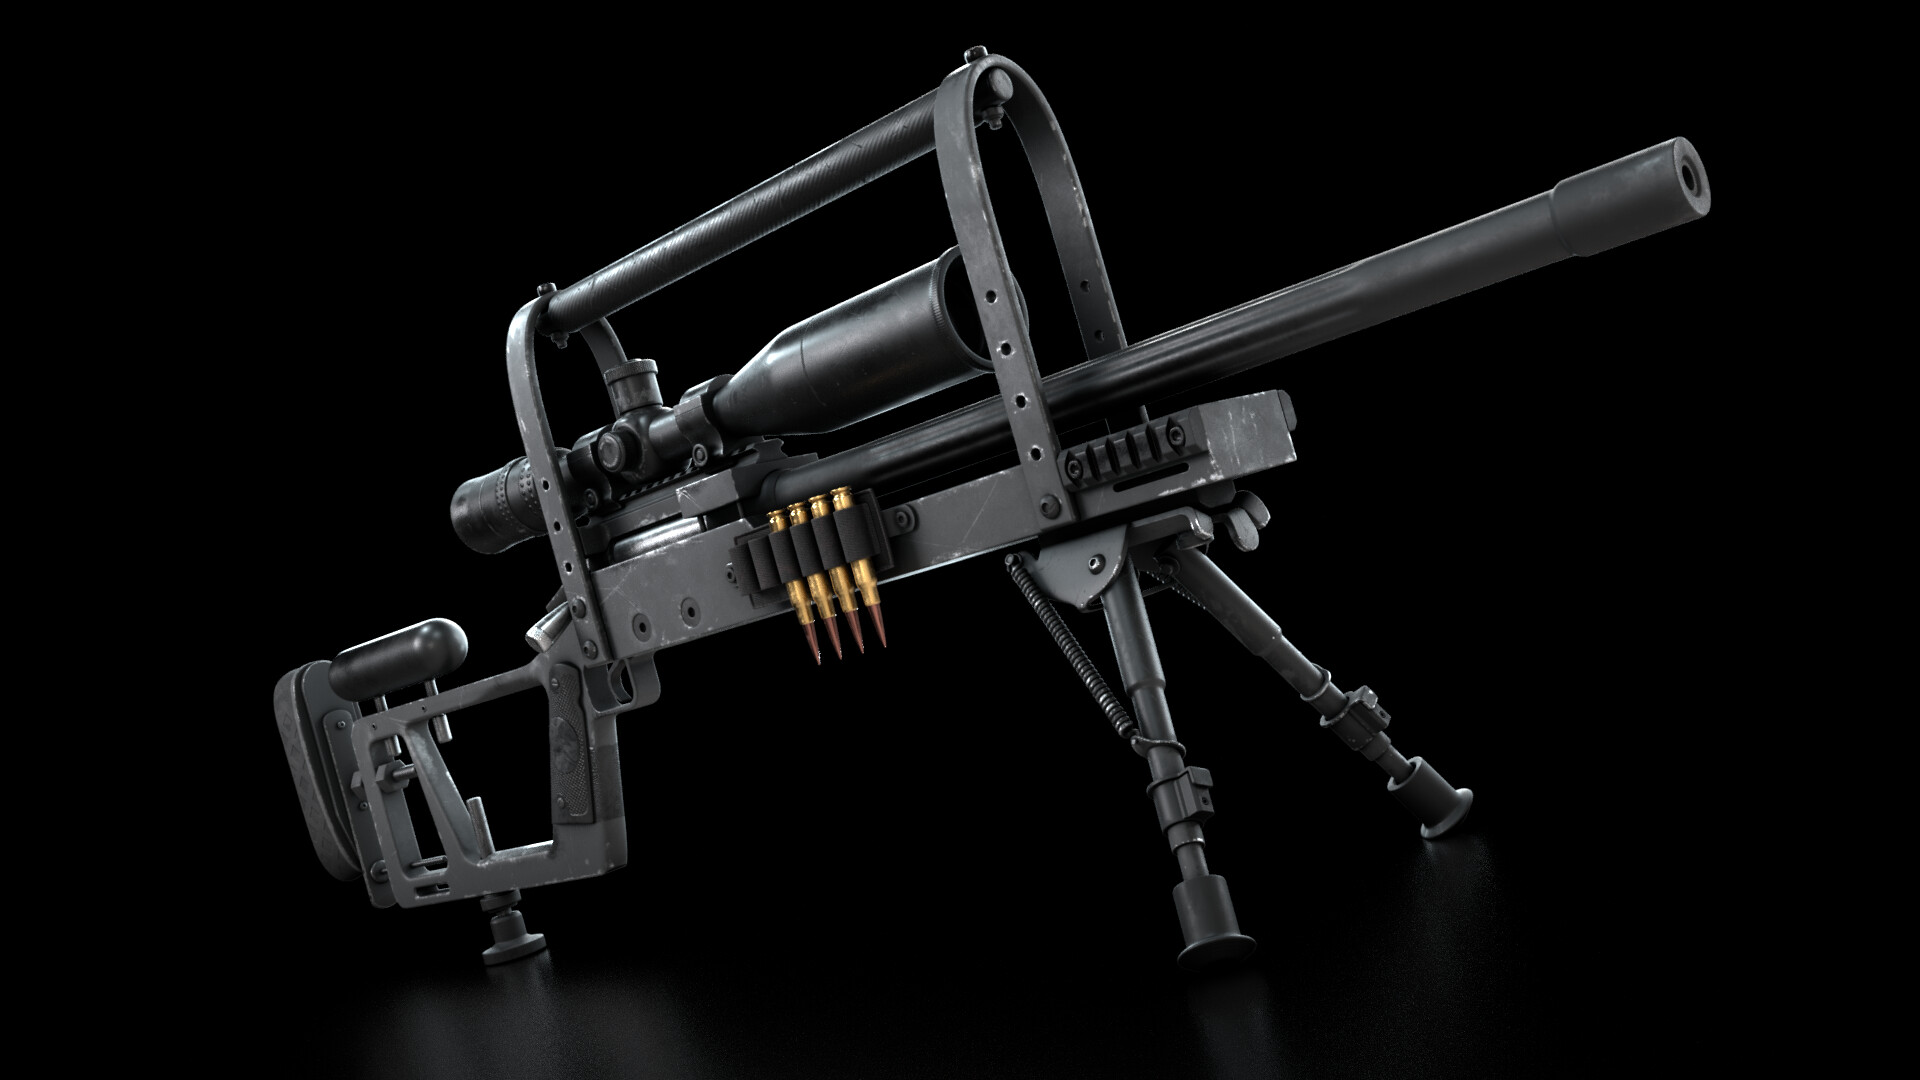 ArtStation - The Black King - D&L MR-30 PG Rifle